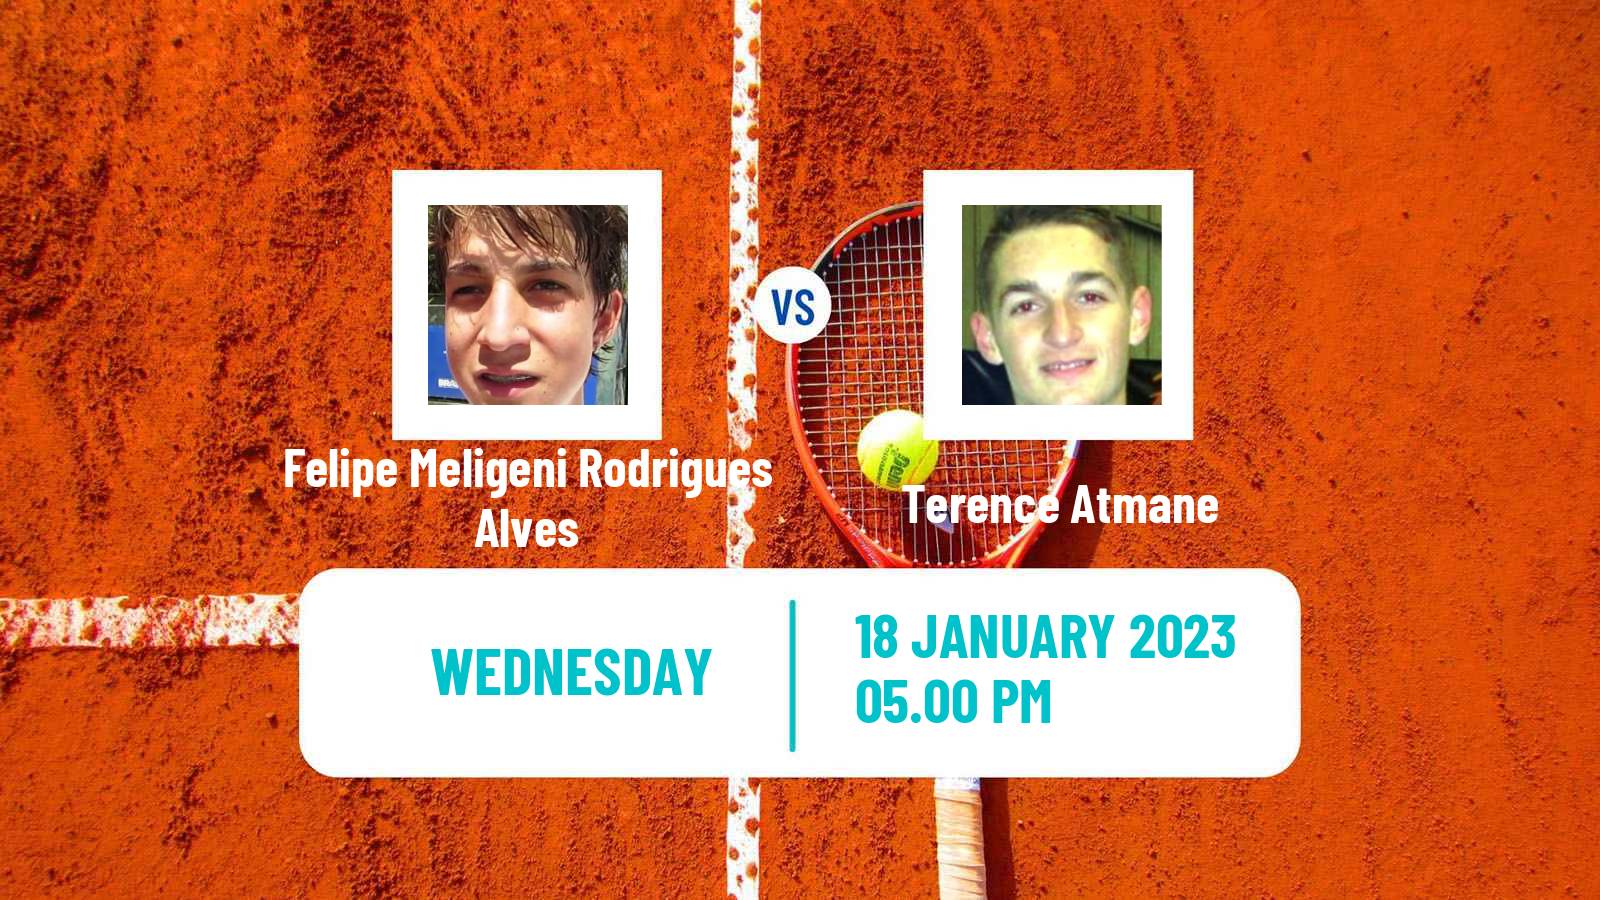 Tennis ATP Challenger Felipe Meligeni Rodrigues Alves - Terence Atmane